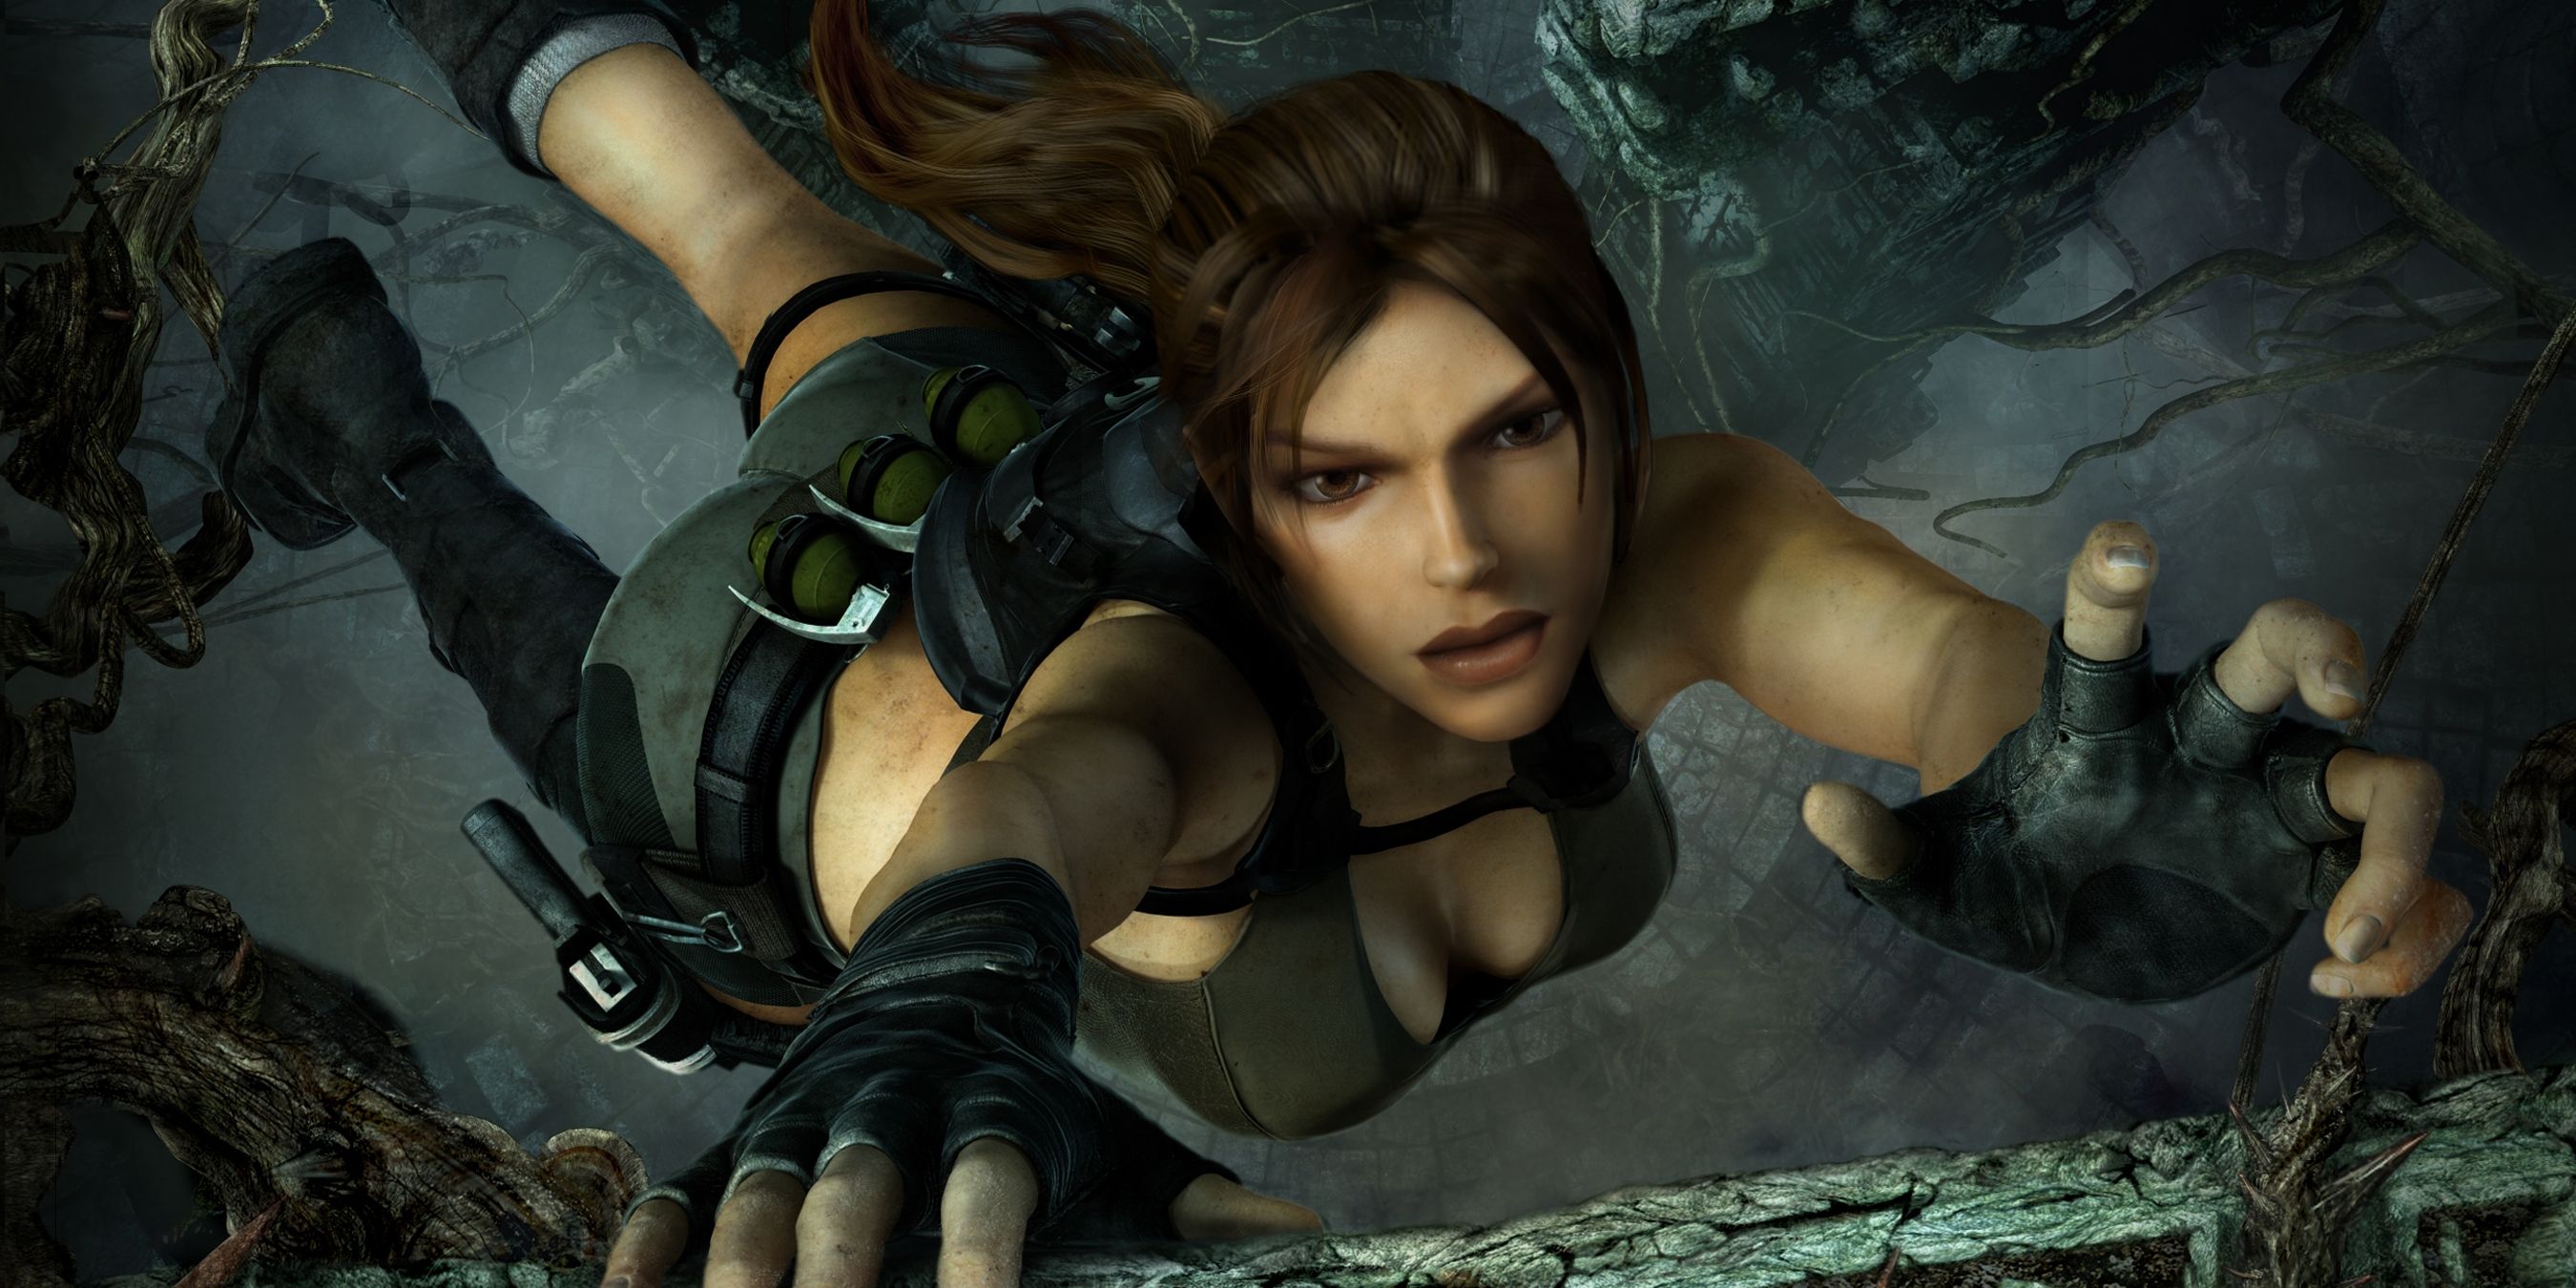 Lara Croft from the Tomb Raider video games. 